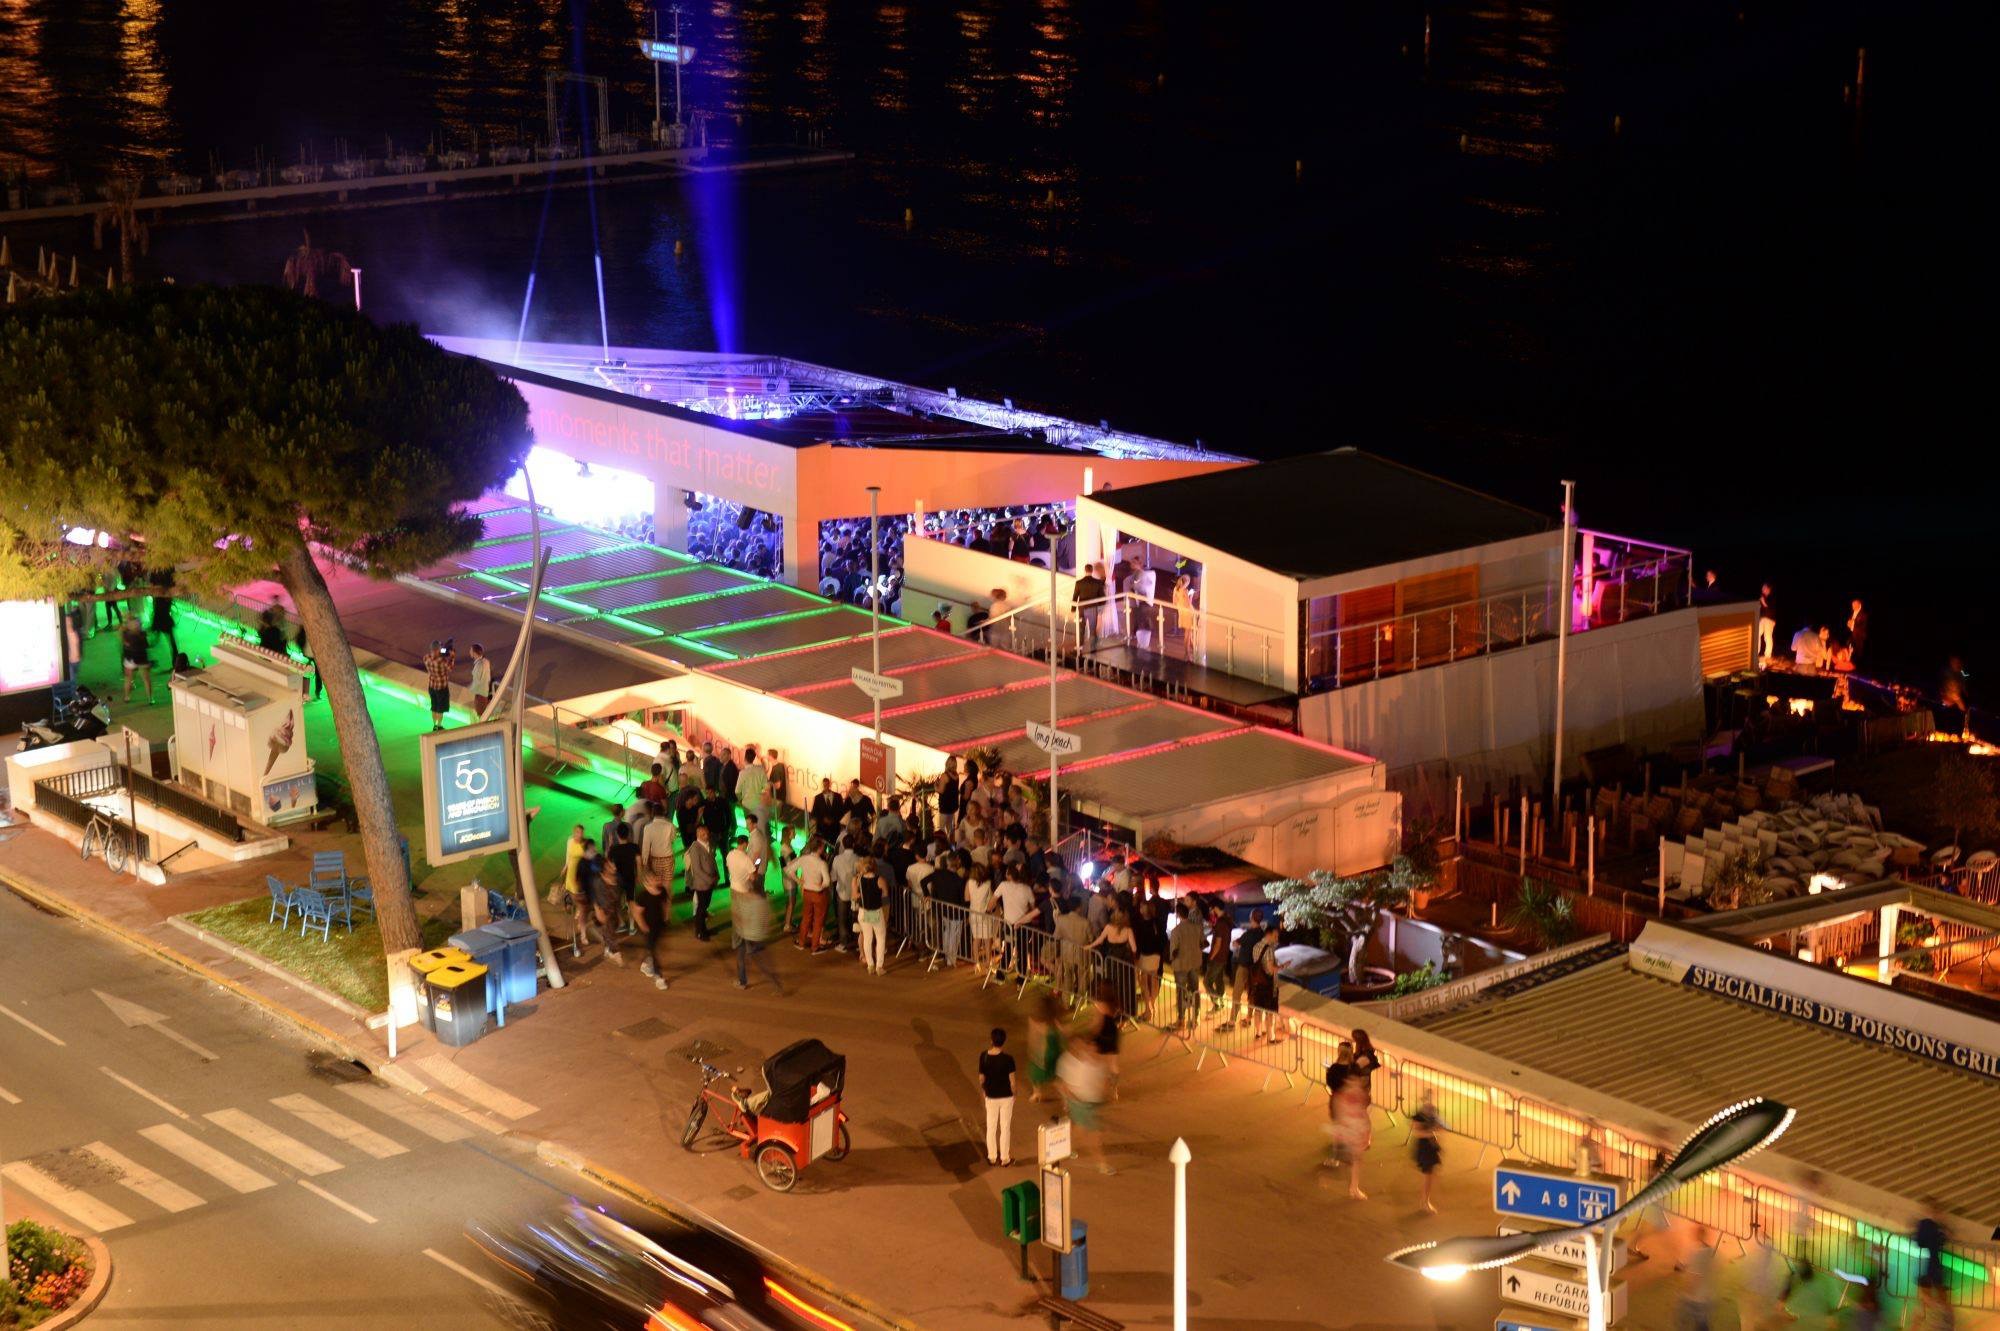 Microsoft Cannes 2014 for Cheerful Twenty-first